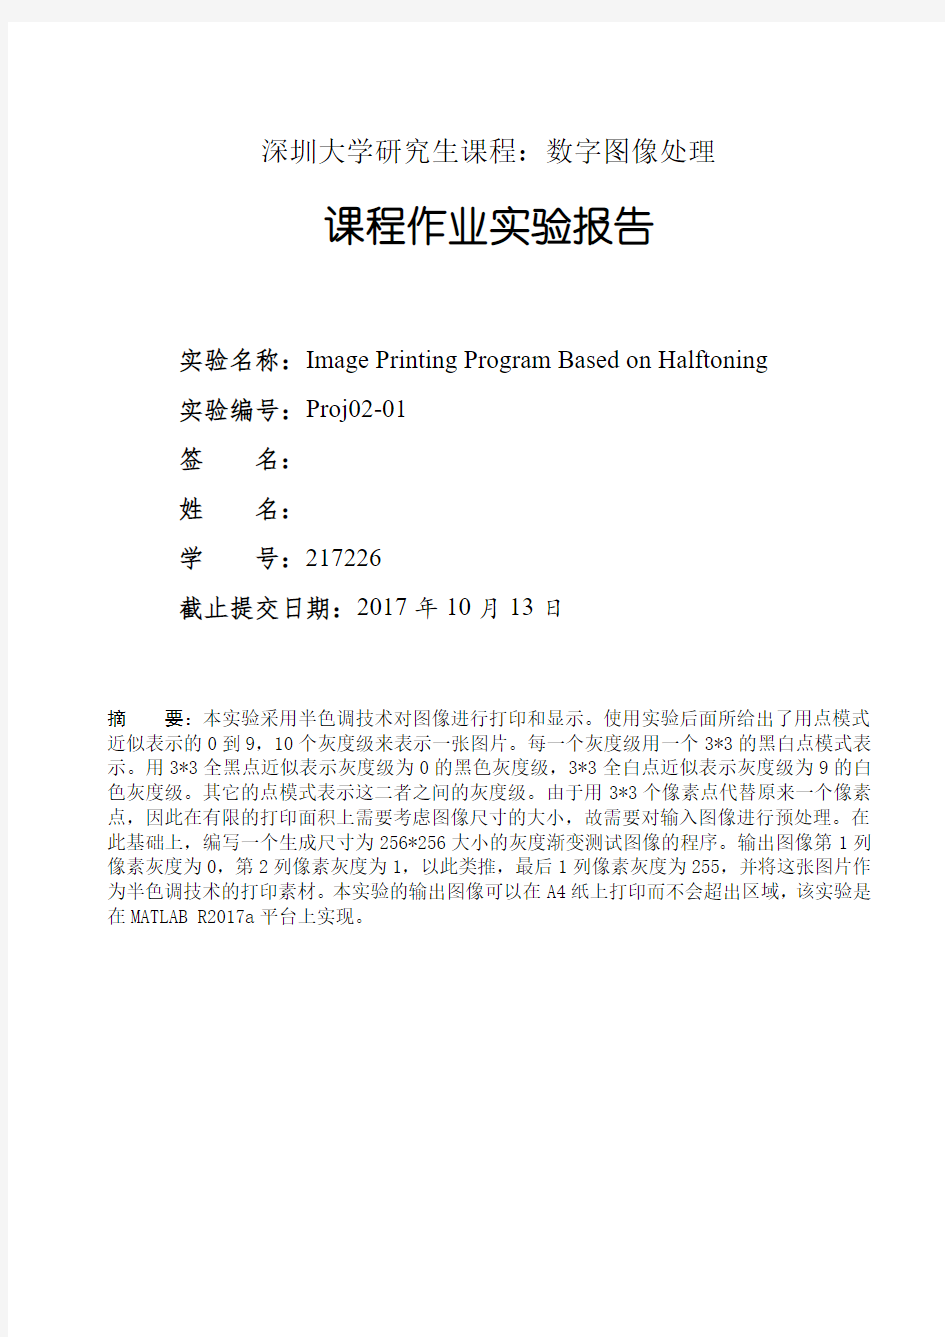 DIP实验报告1-Image Printing Program Based on Halftoning